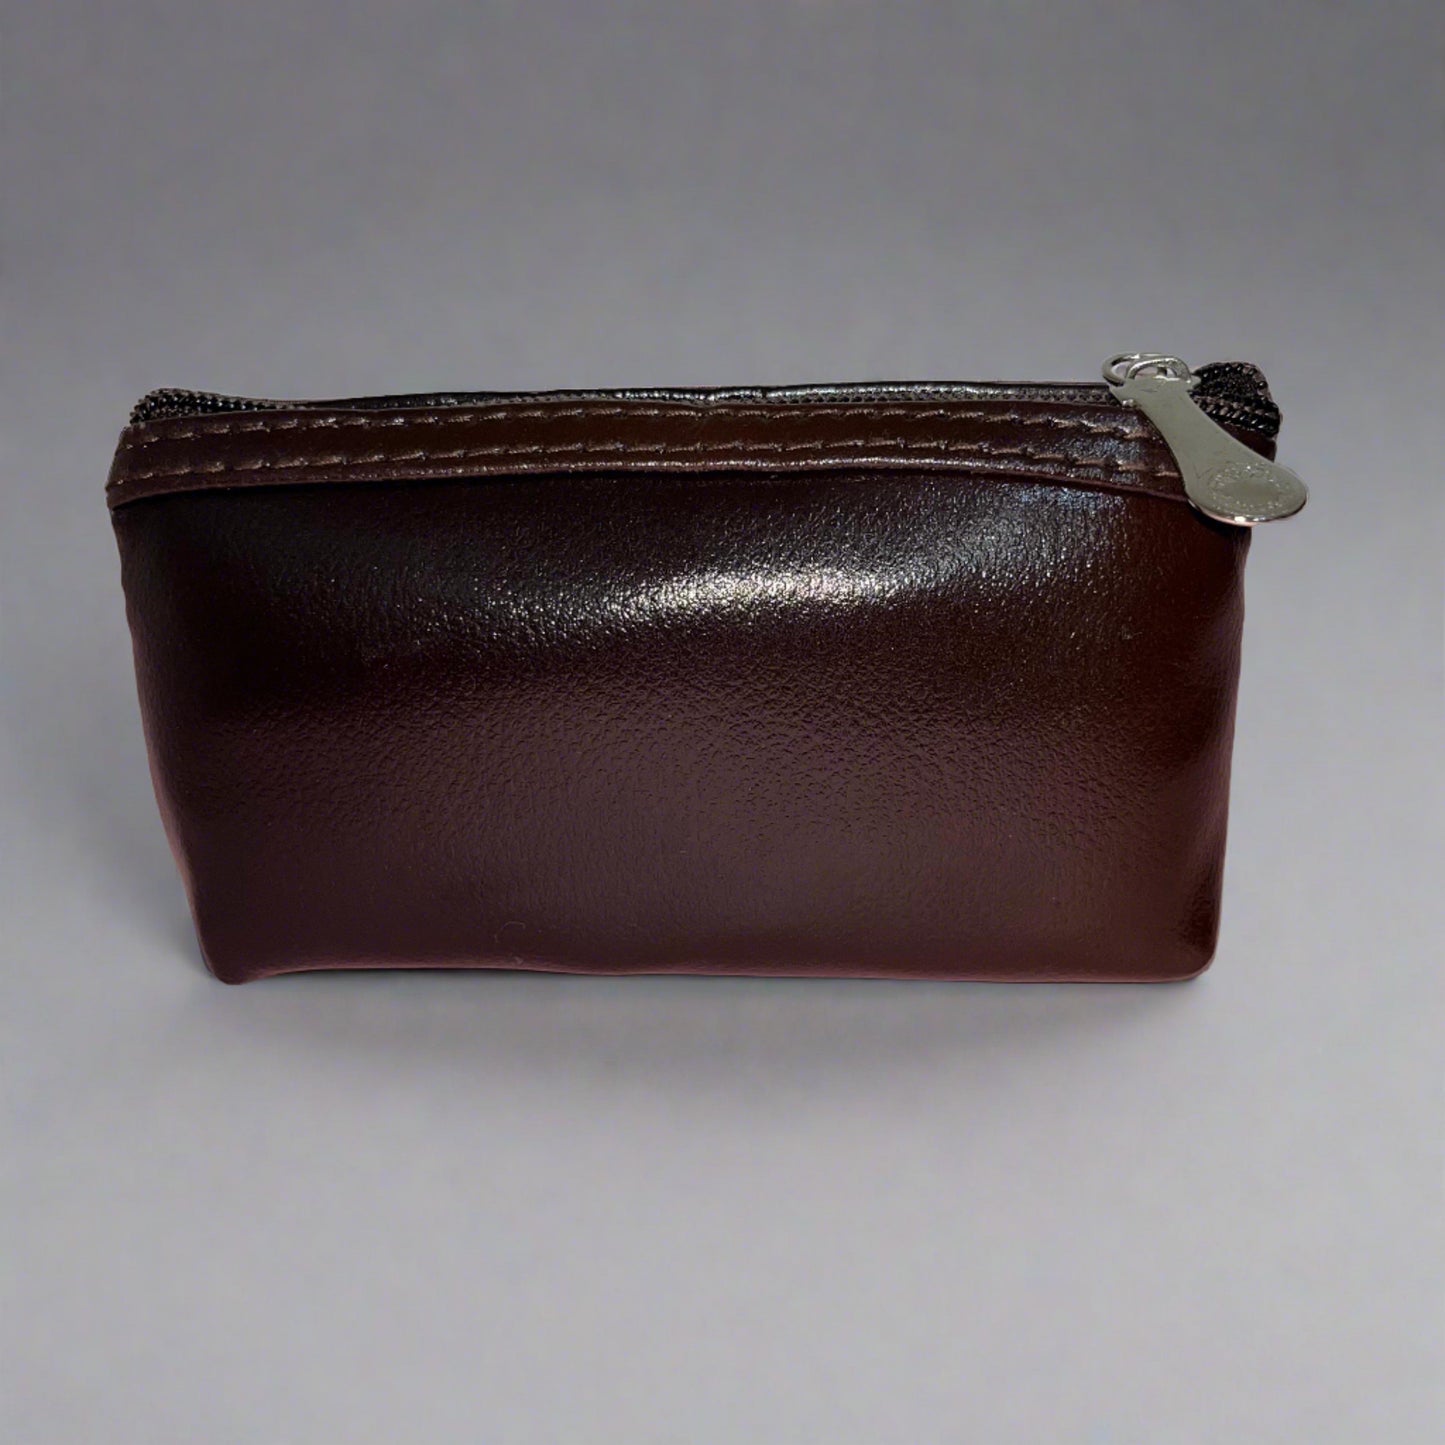 BATUTA Coin Purse Genuine Leather Money Organiser Card Holder Pouch Case Wallets Blouse Purse for Women and Girls